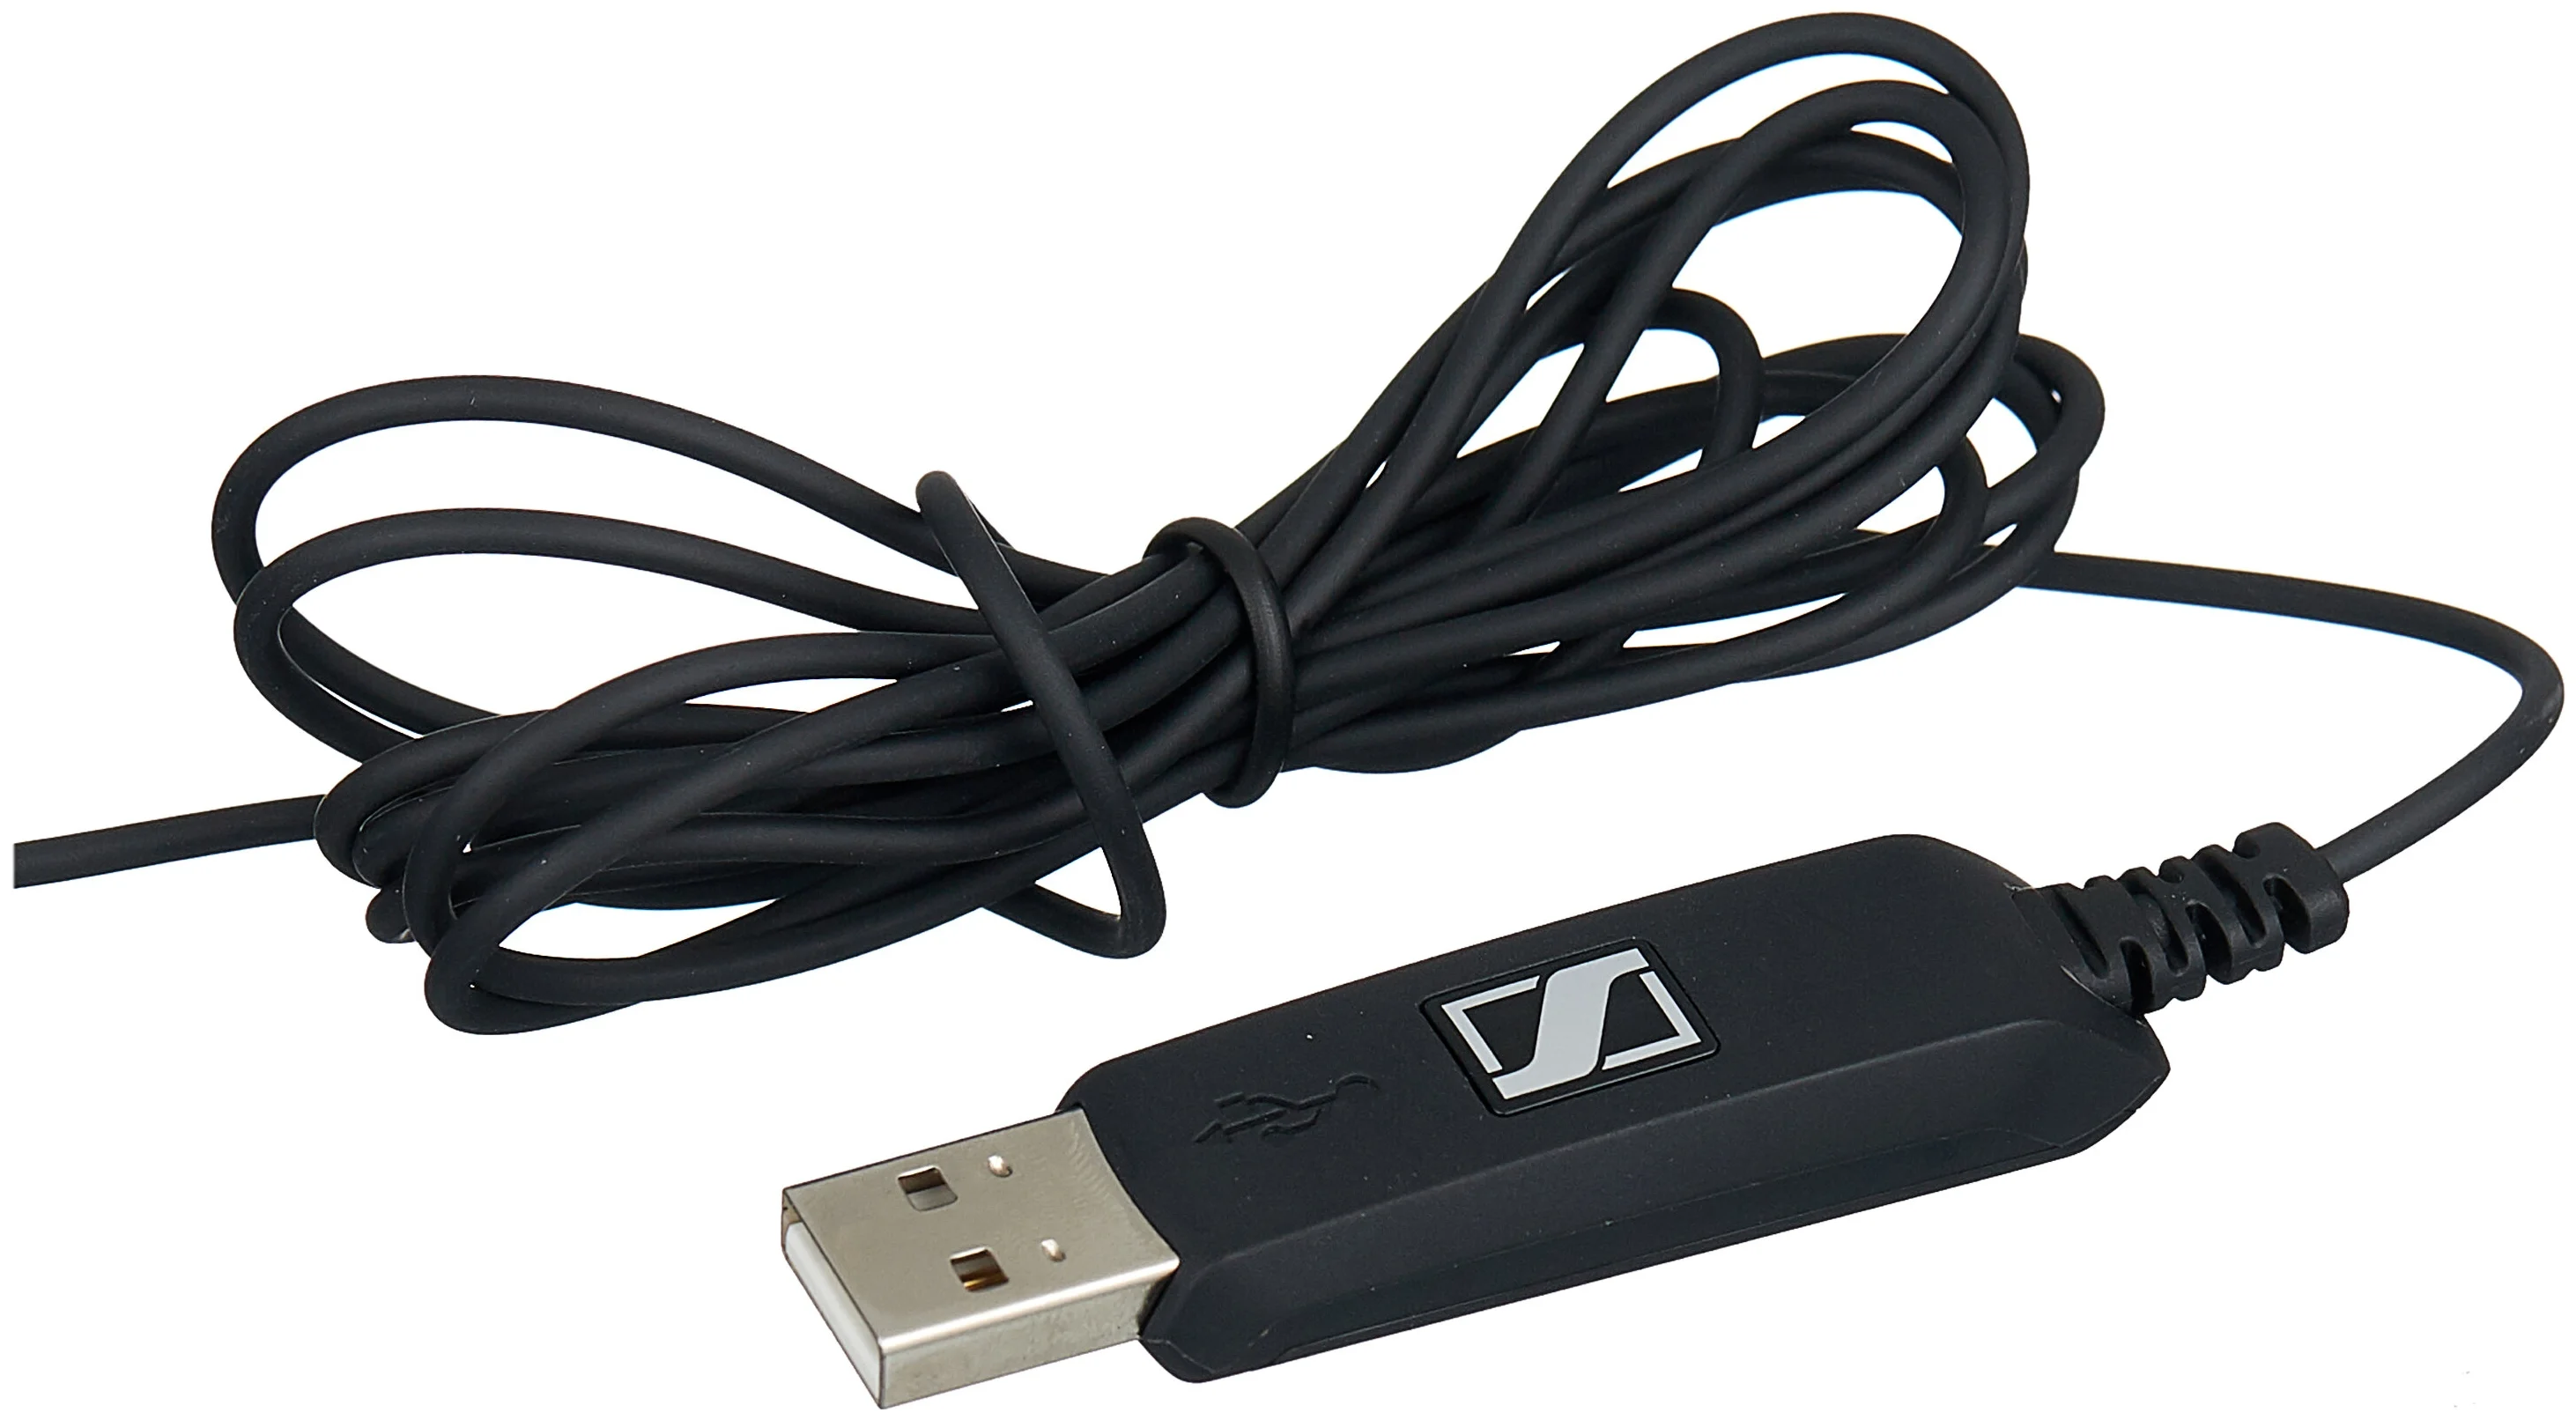 Sennheiser PC 7 USB - частота воспроизведения 42-17000 Гц